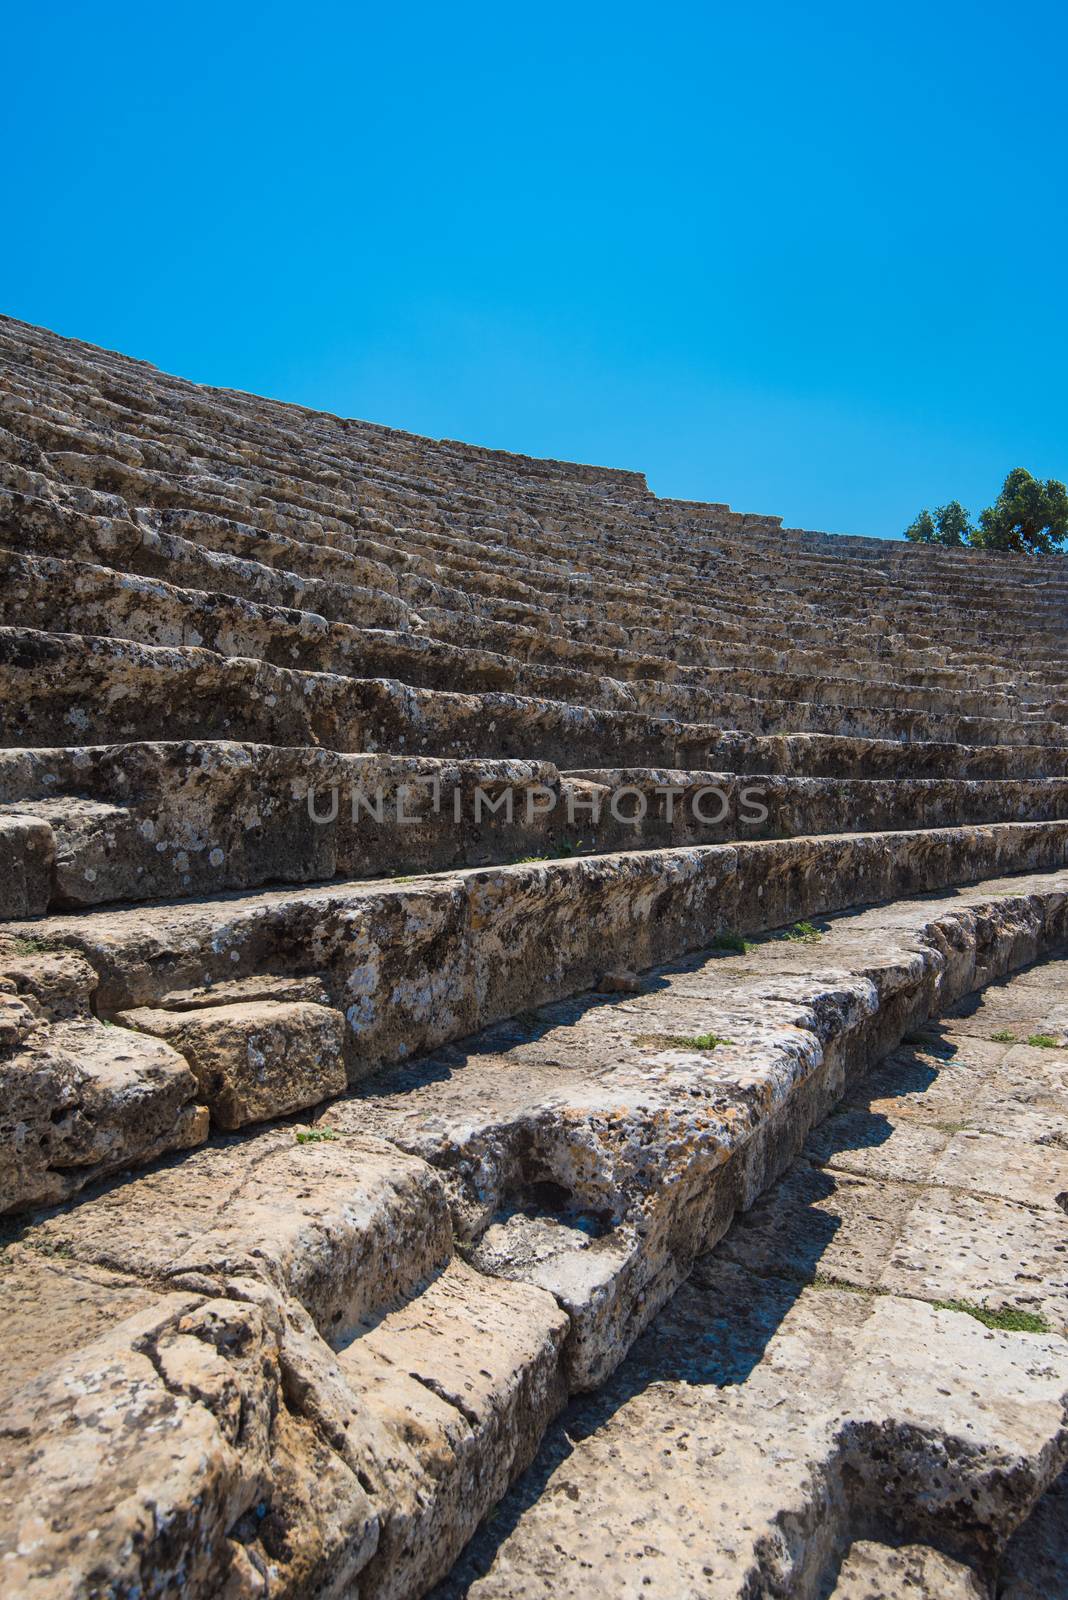 Roman amphitheatre in the ruins of Hierapolis, in Pamukkale, near modern turkey city Denizli, Turkey.